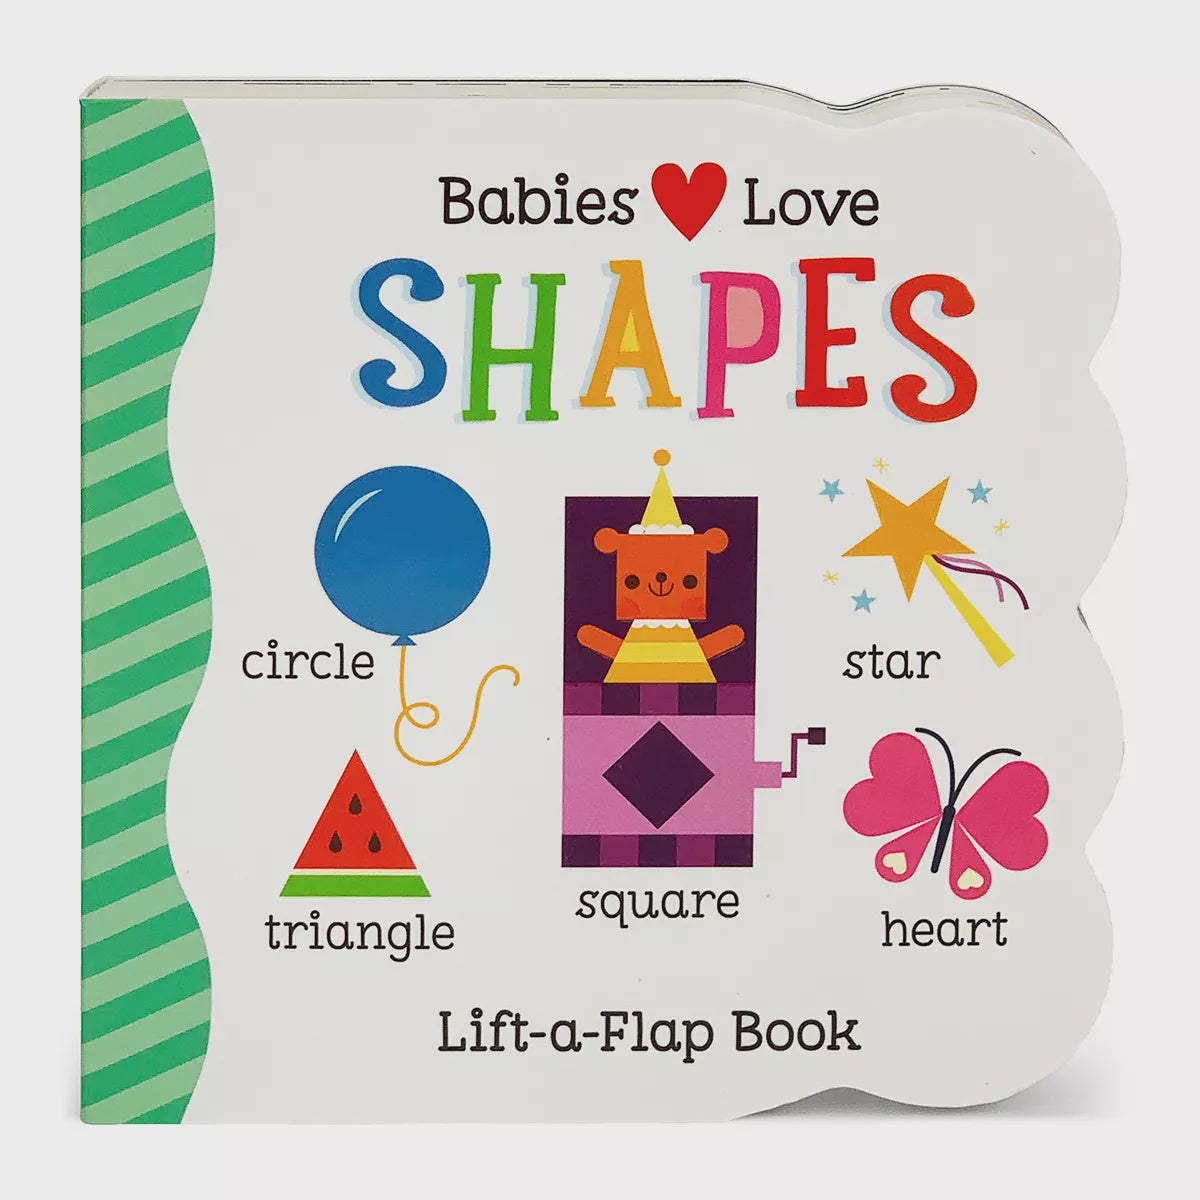 Babies Love Shapes